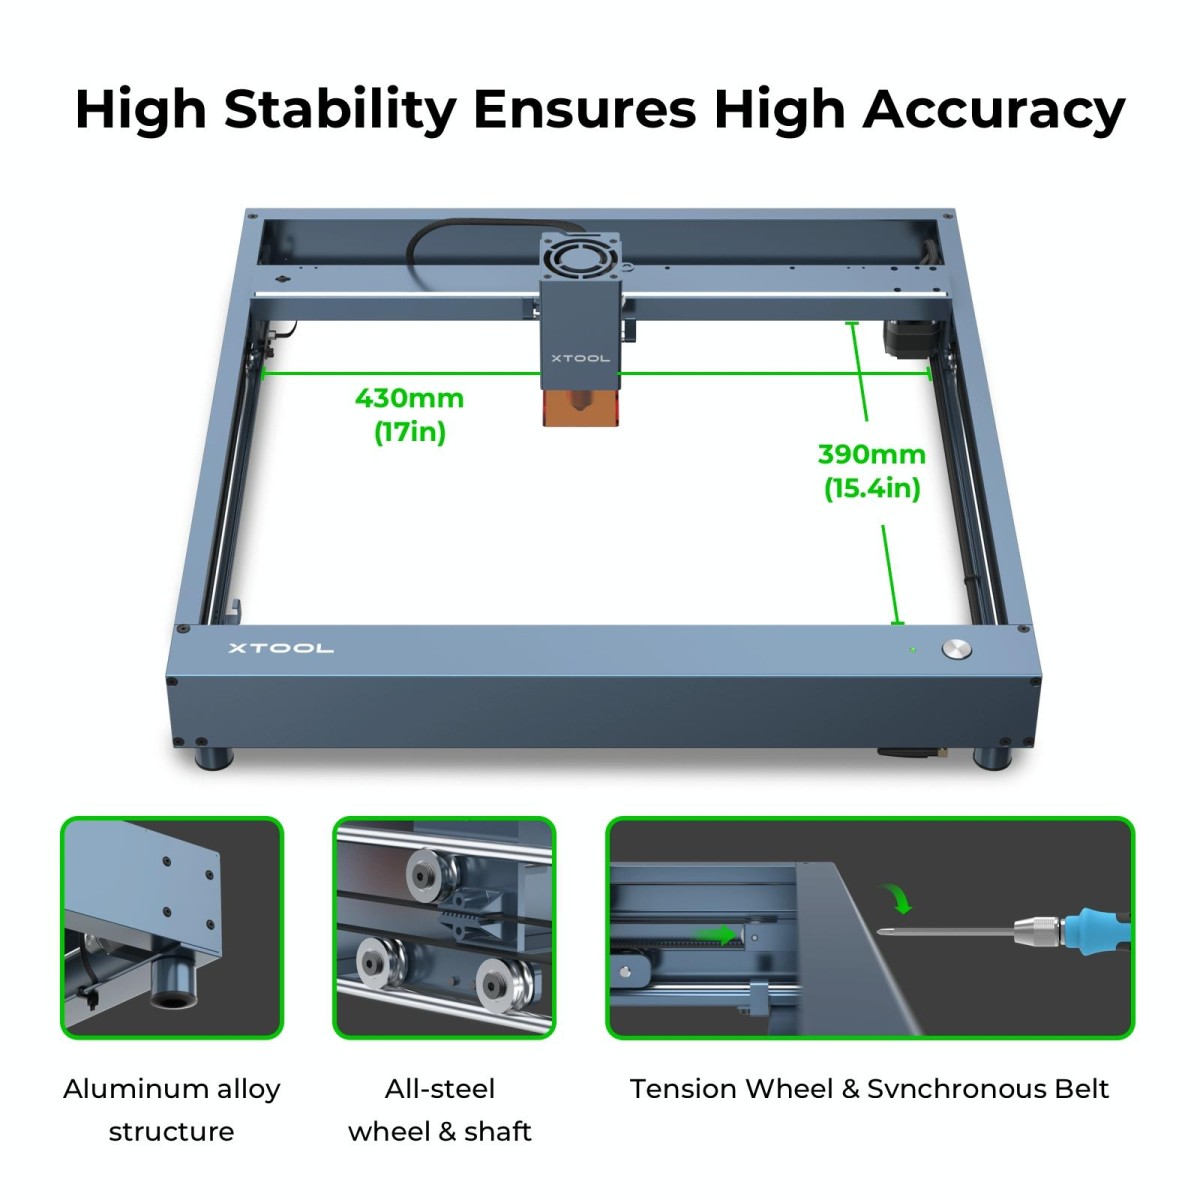 XTOOL D1 Pro-20W High Accuracy DIY Laser Engraving & Cutting Machine, Plug Type:US Plug(Metal Gray)